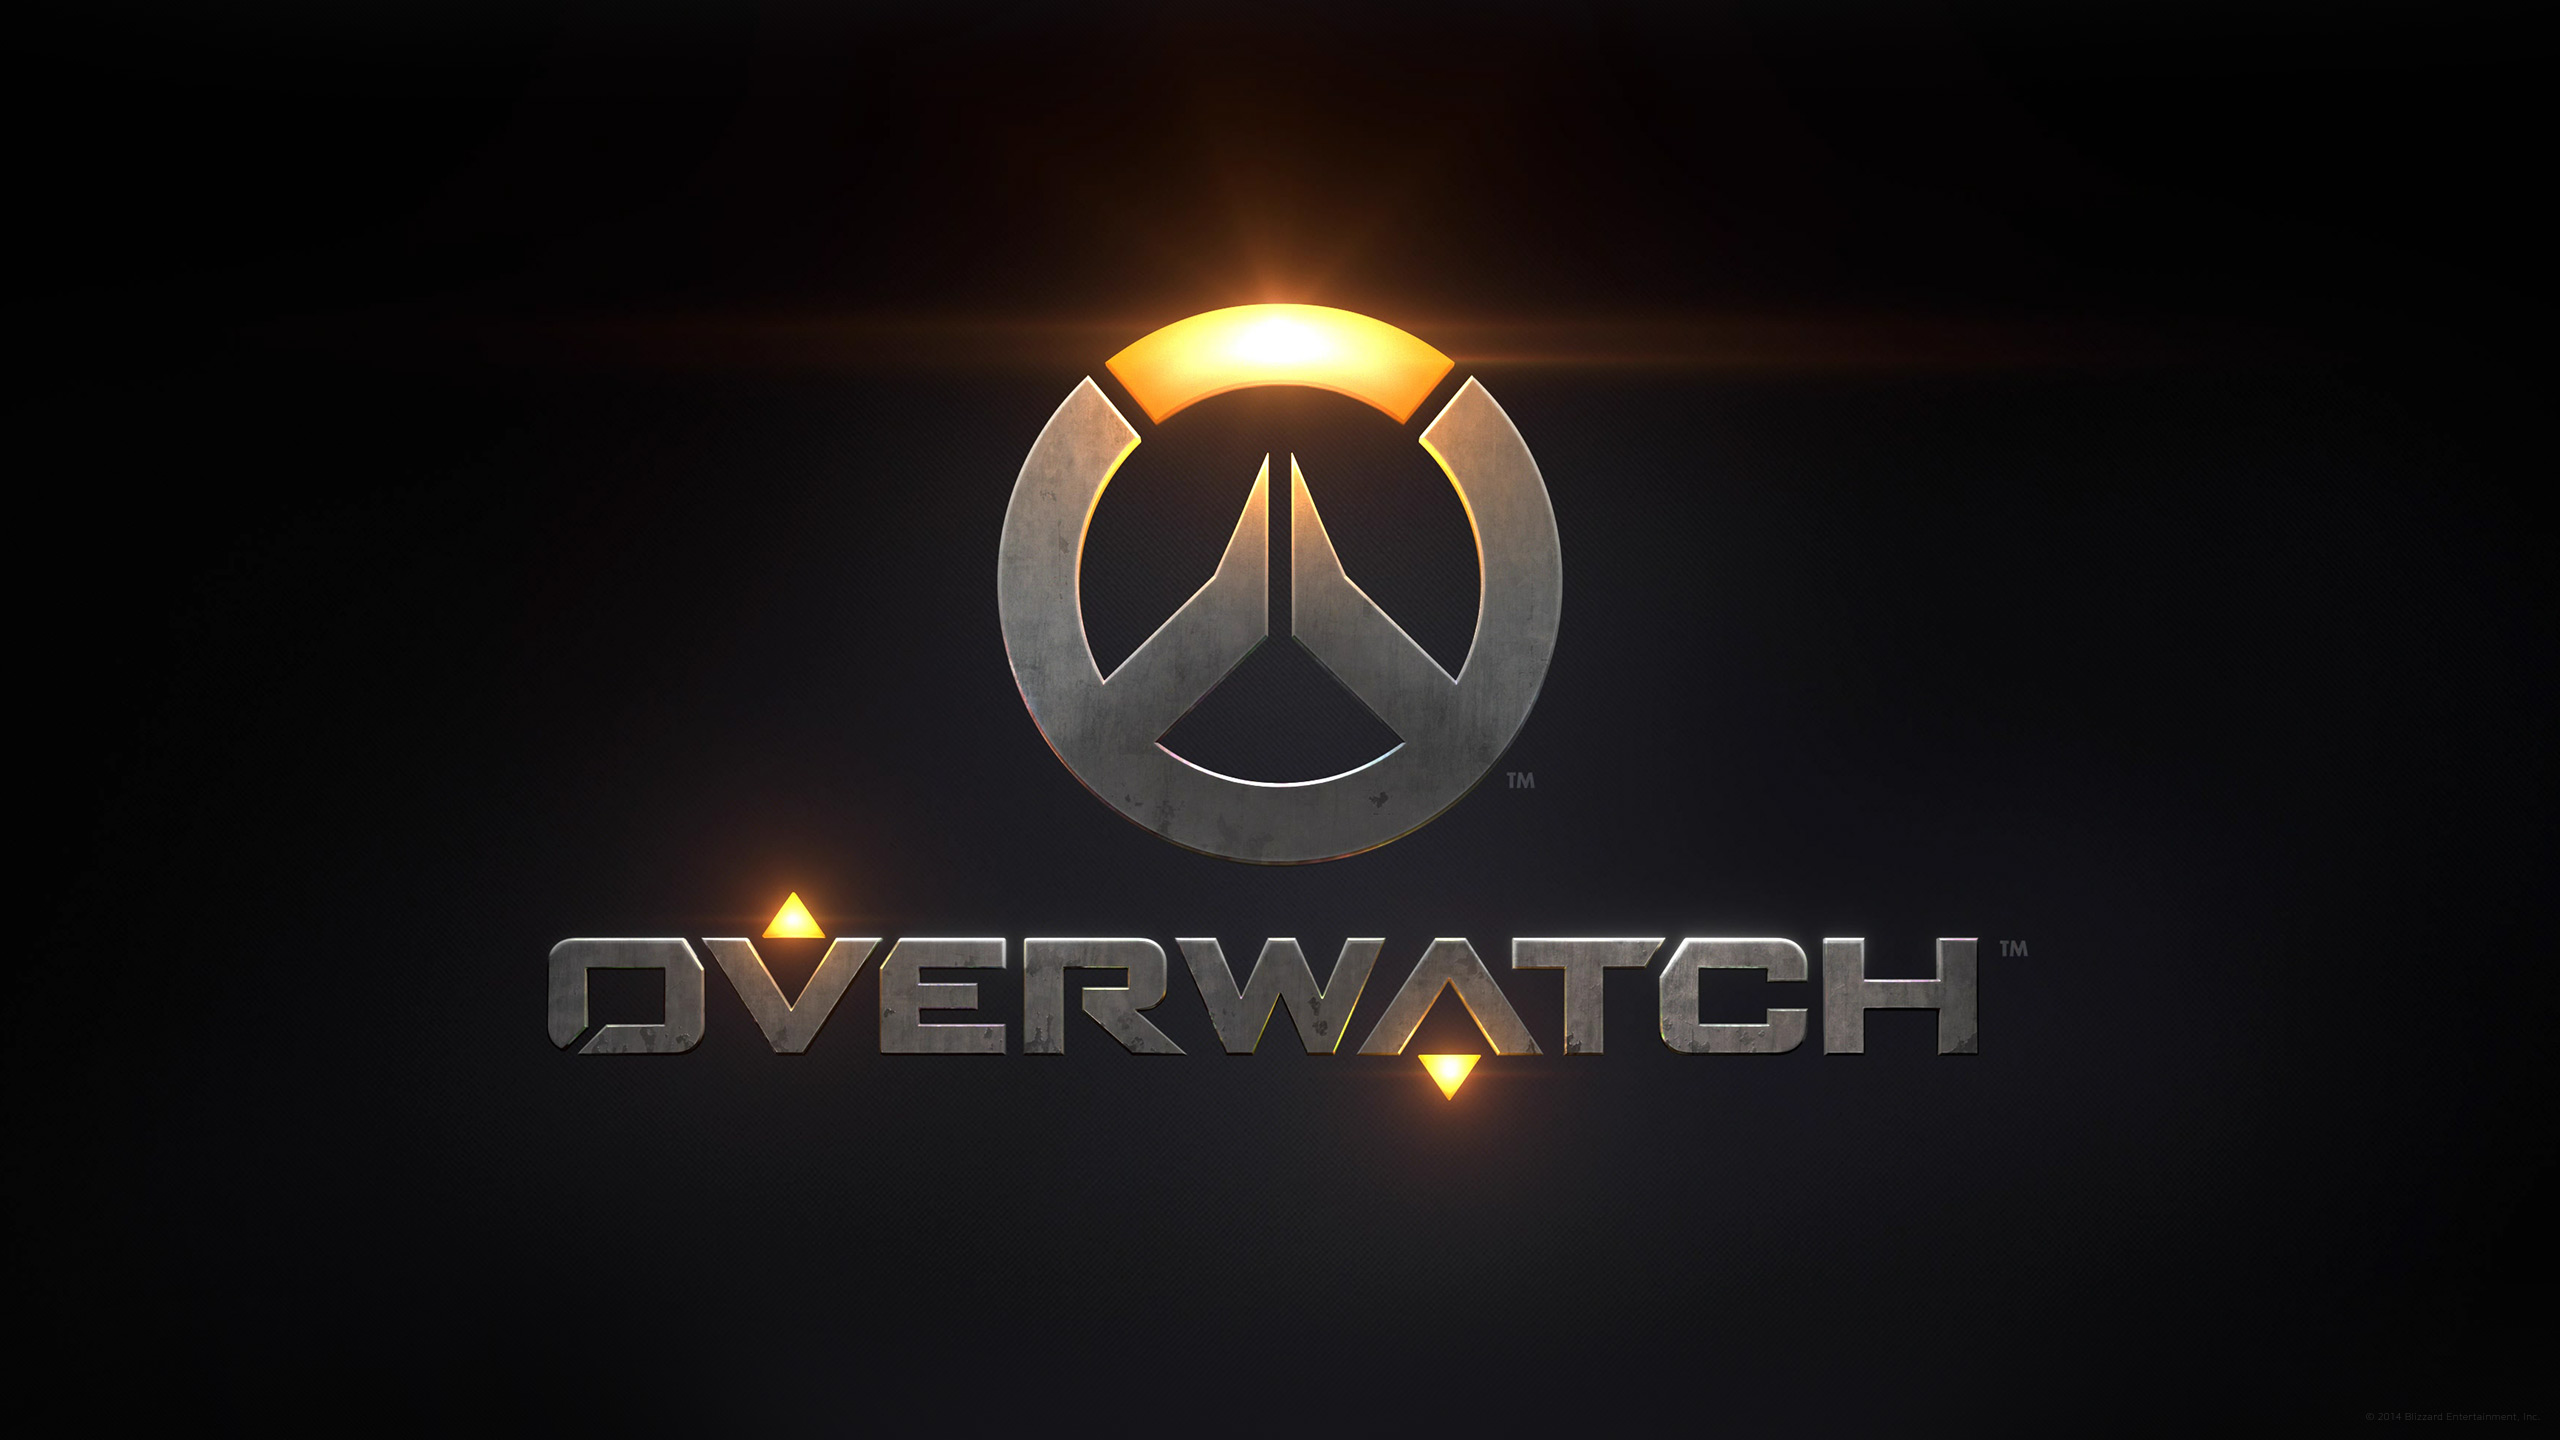 REVEALED: “Overwatch” Cinematic Teaser - 